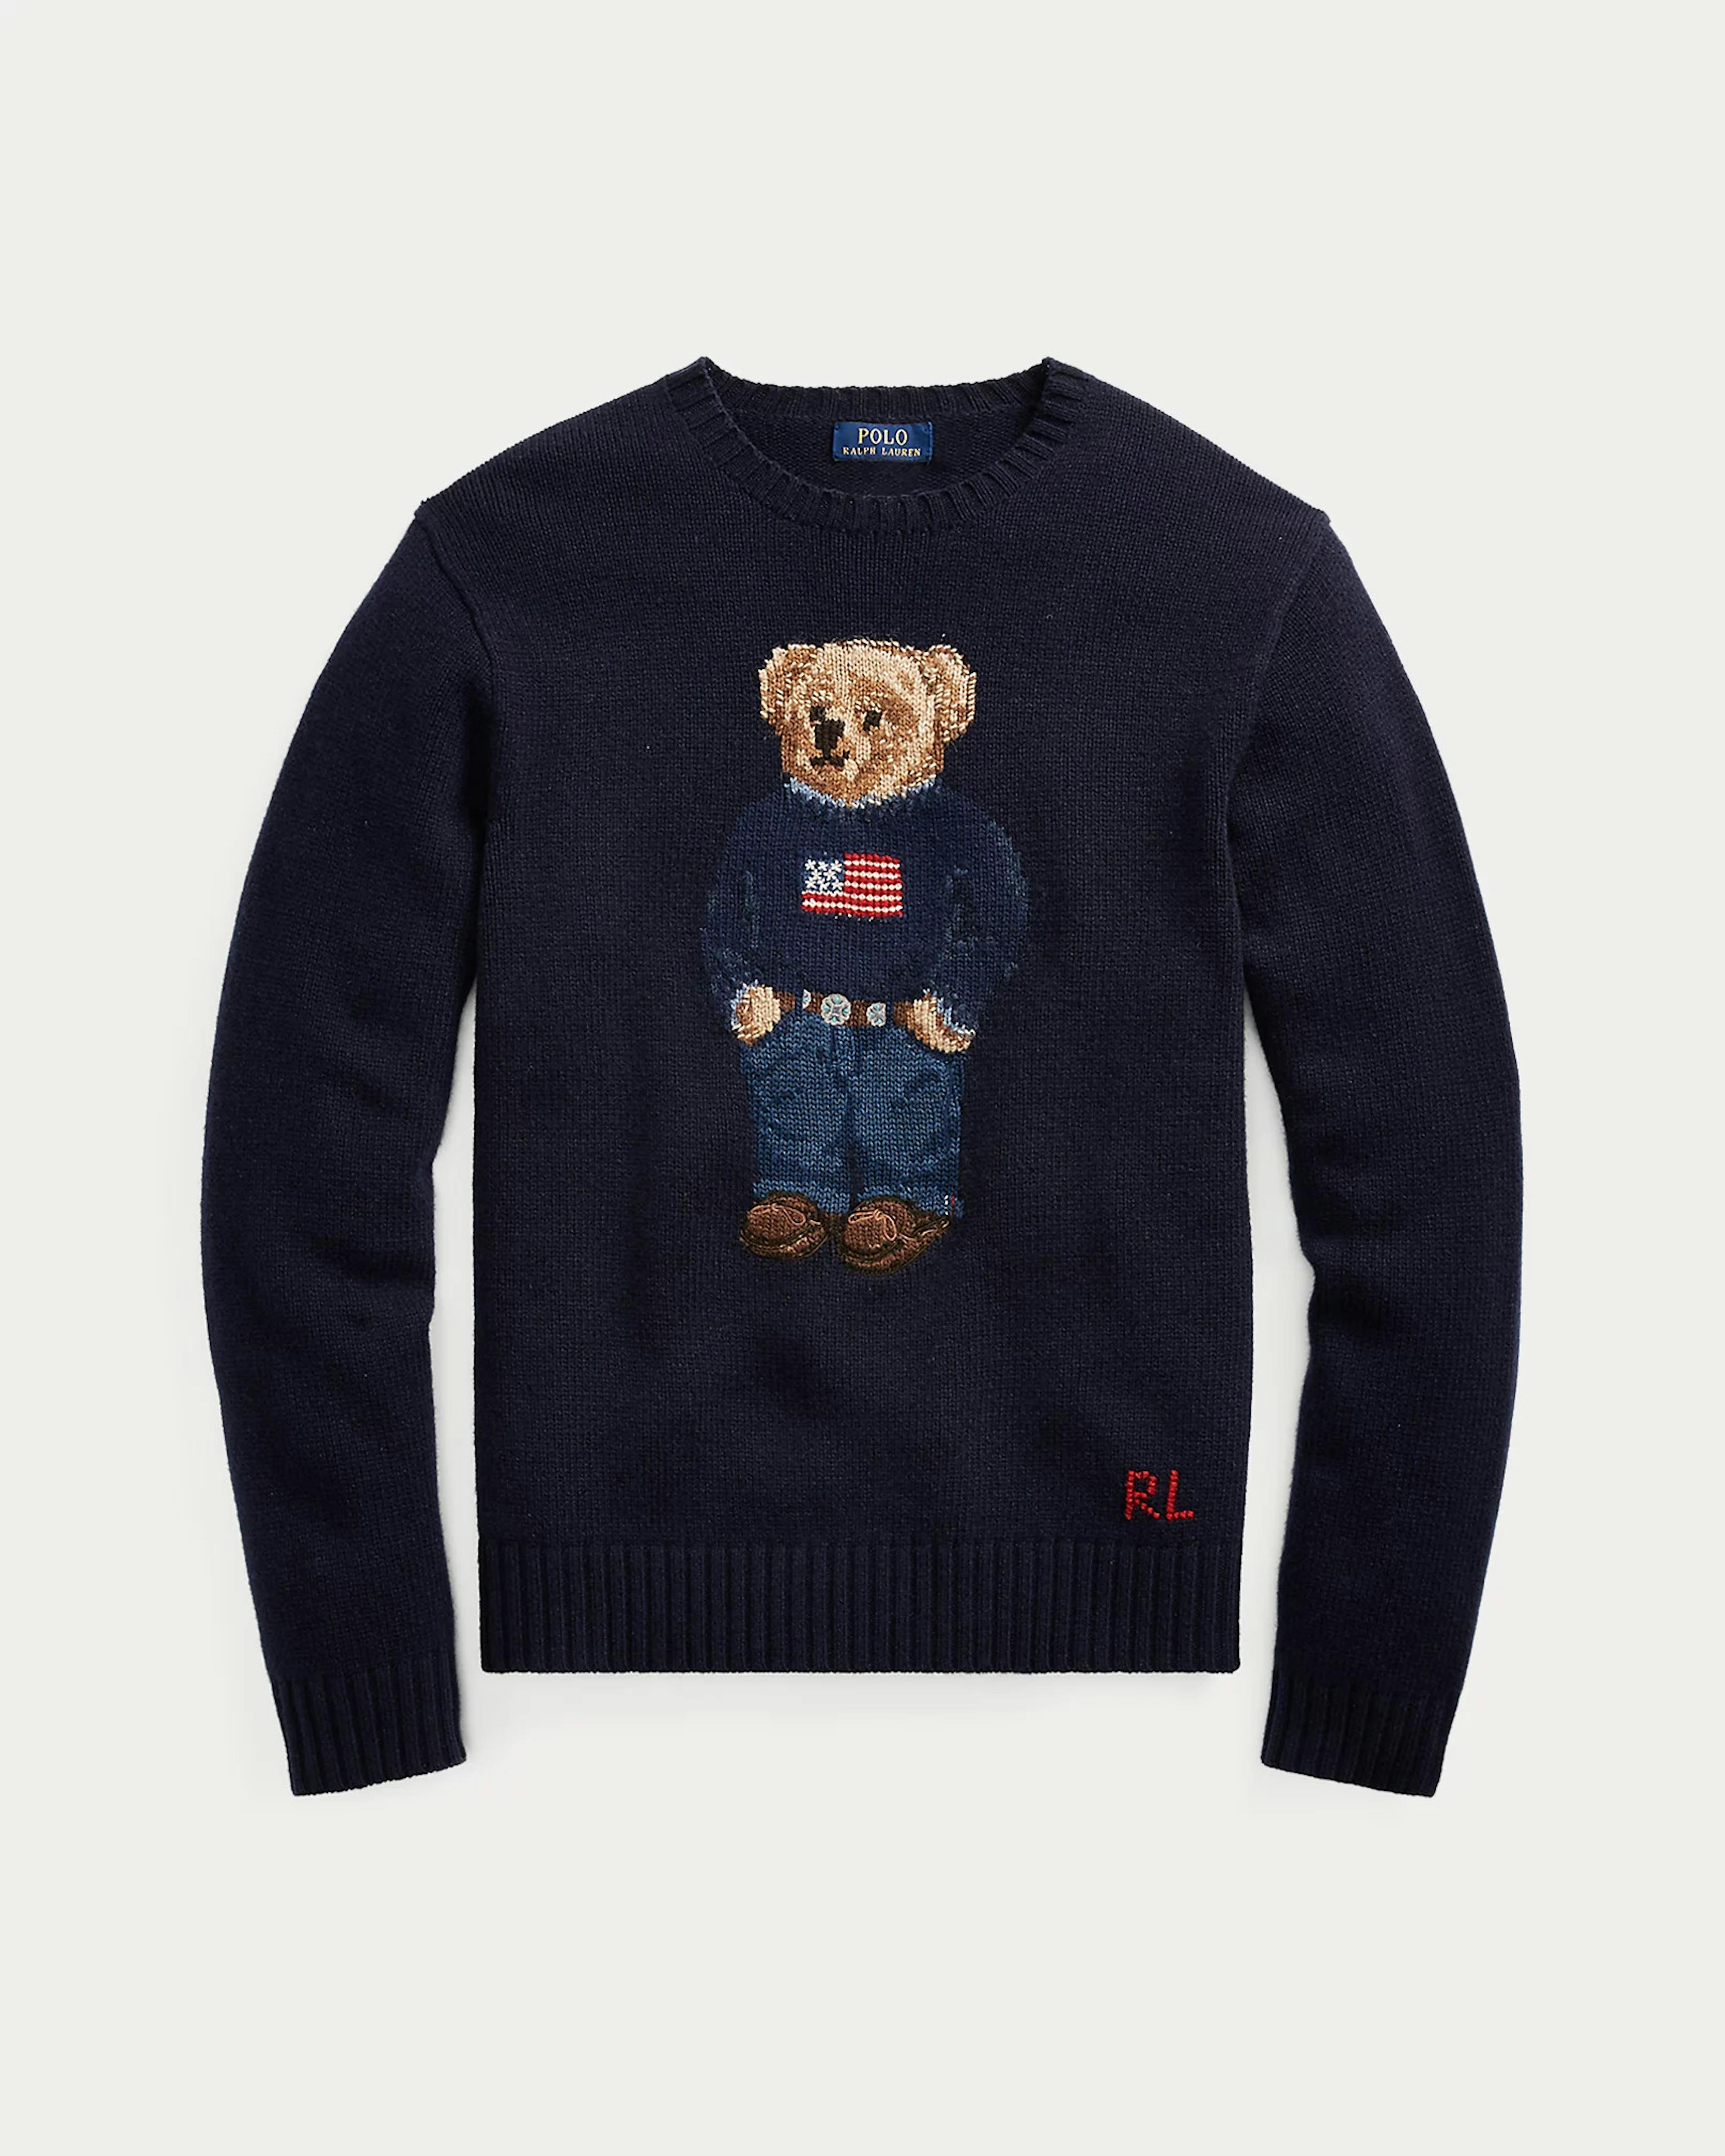 Iconic Polo Bear Sweater